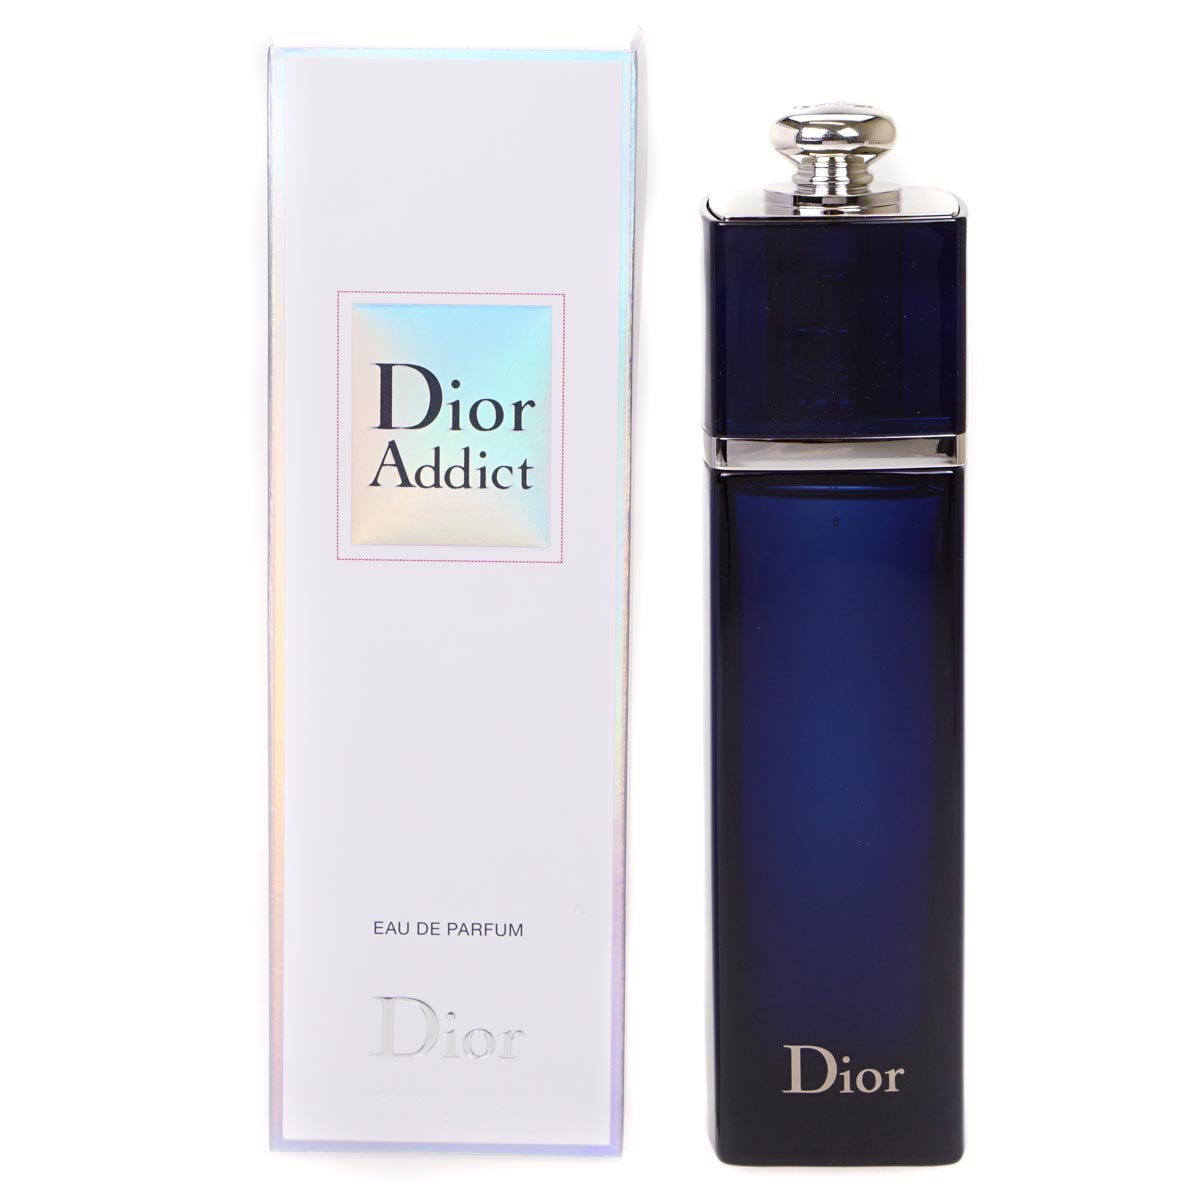 Dior Addict 100ml Eau De Parfum